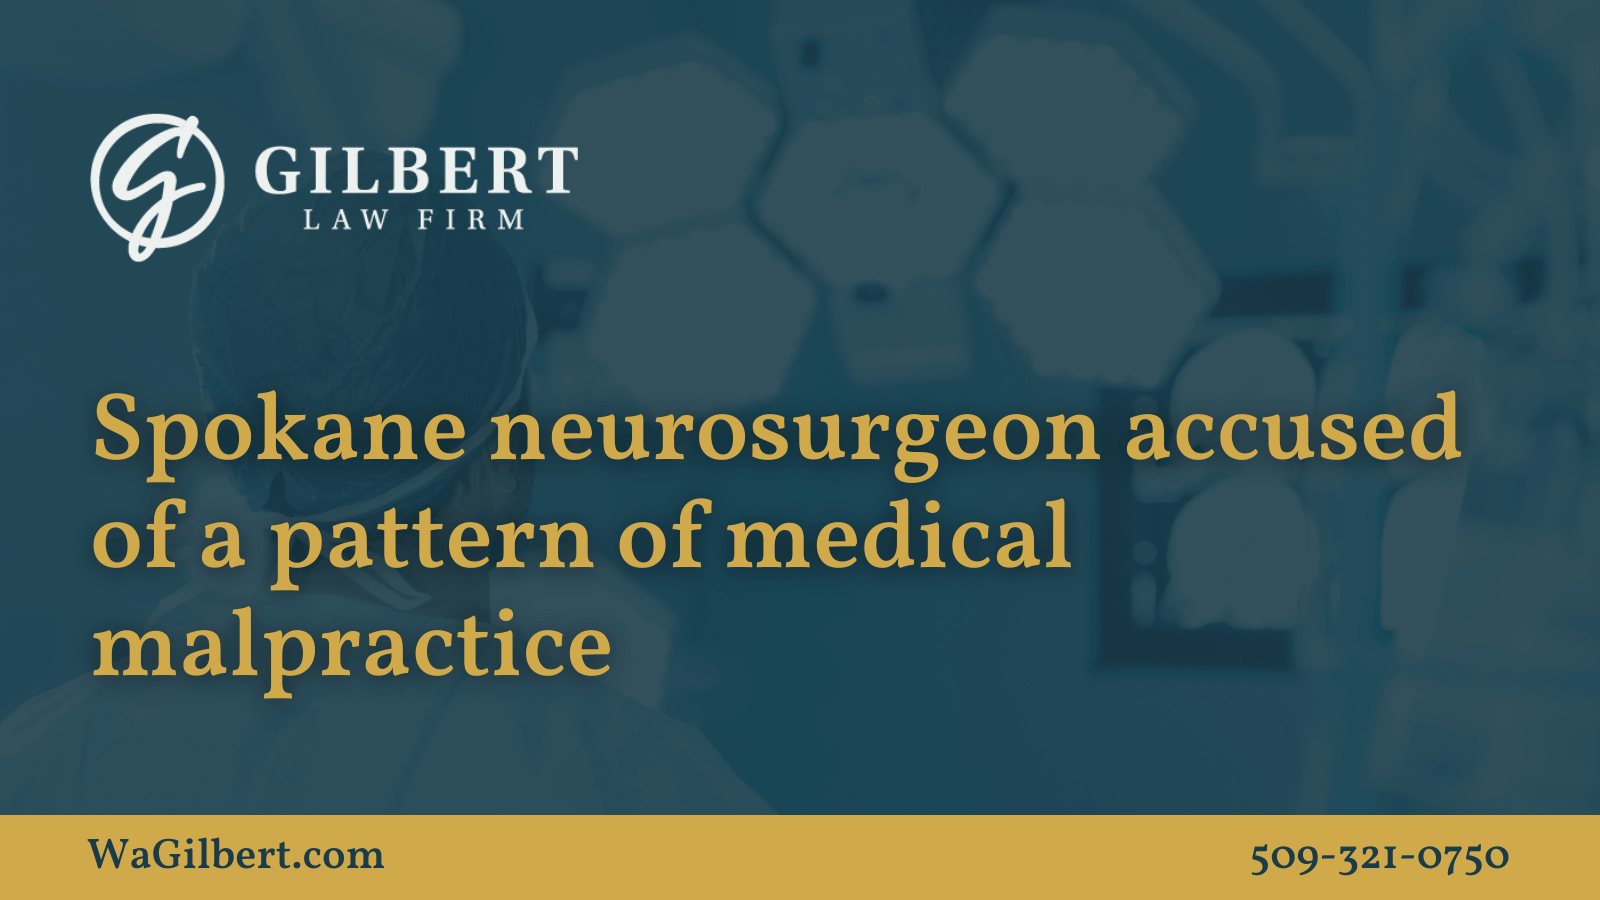 Spokane neurosurgeon accused of a pattern of medical malpractice - Gilbert Law Firm Spokane Washington